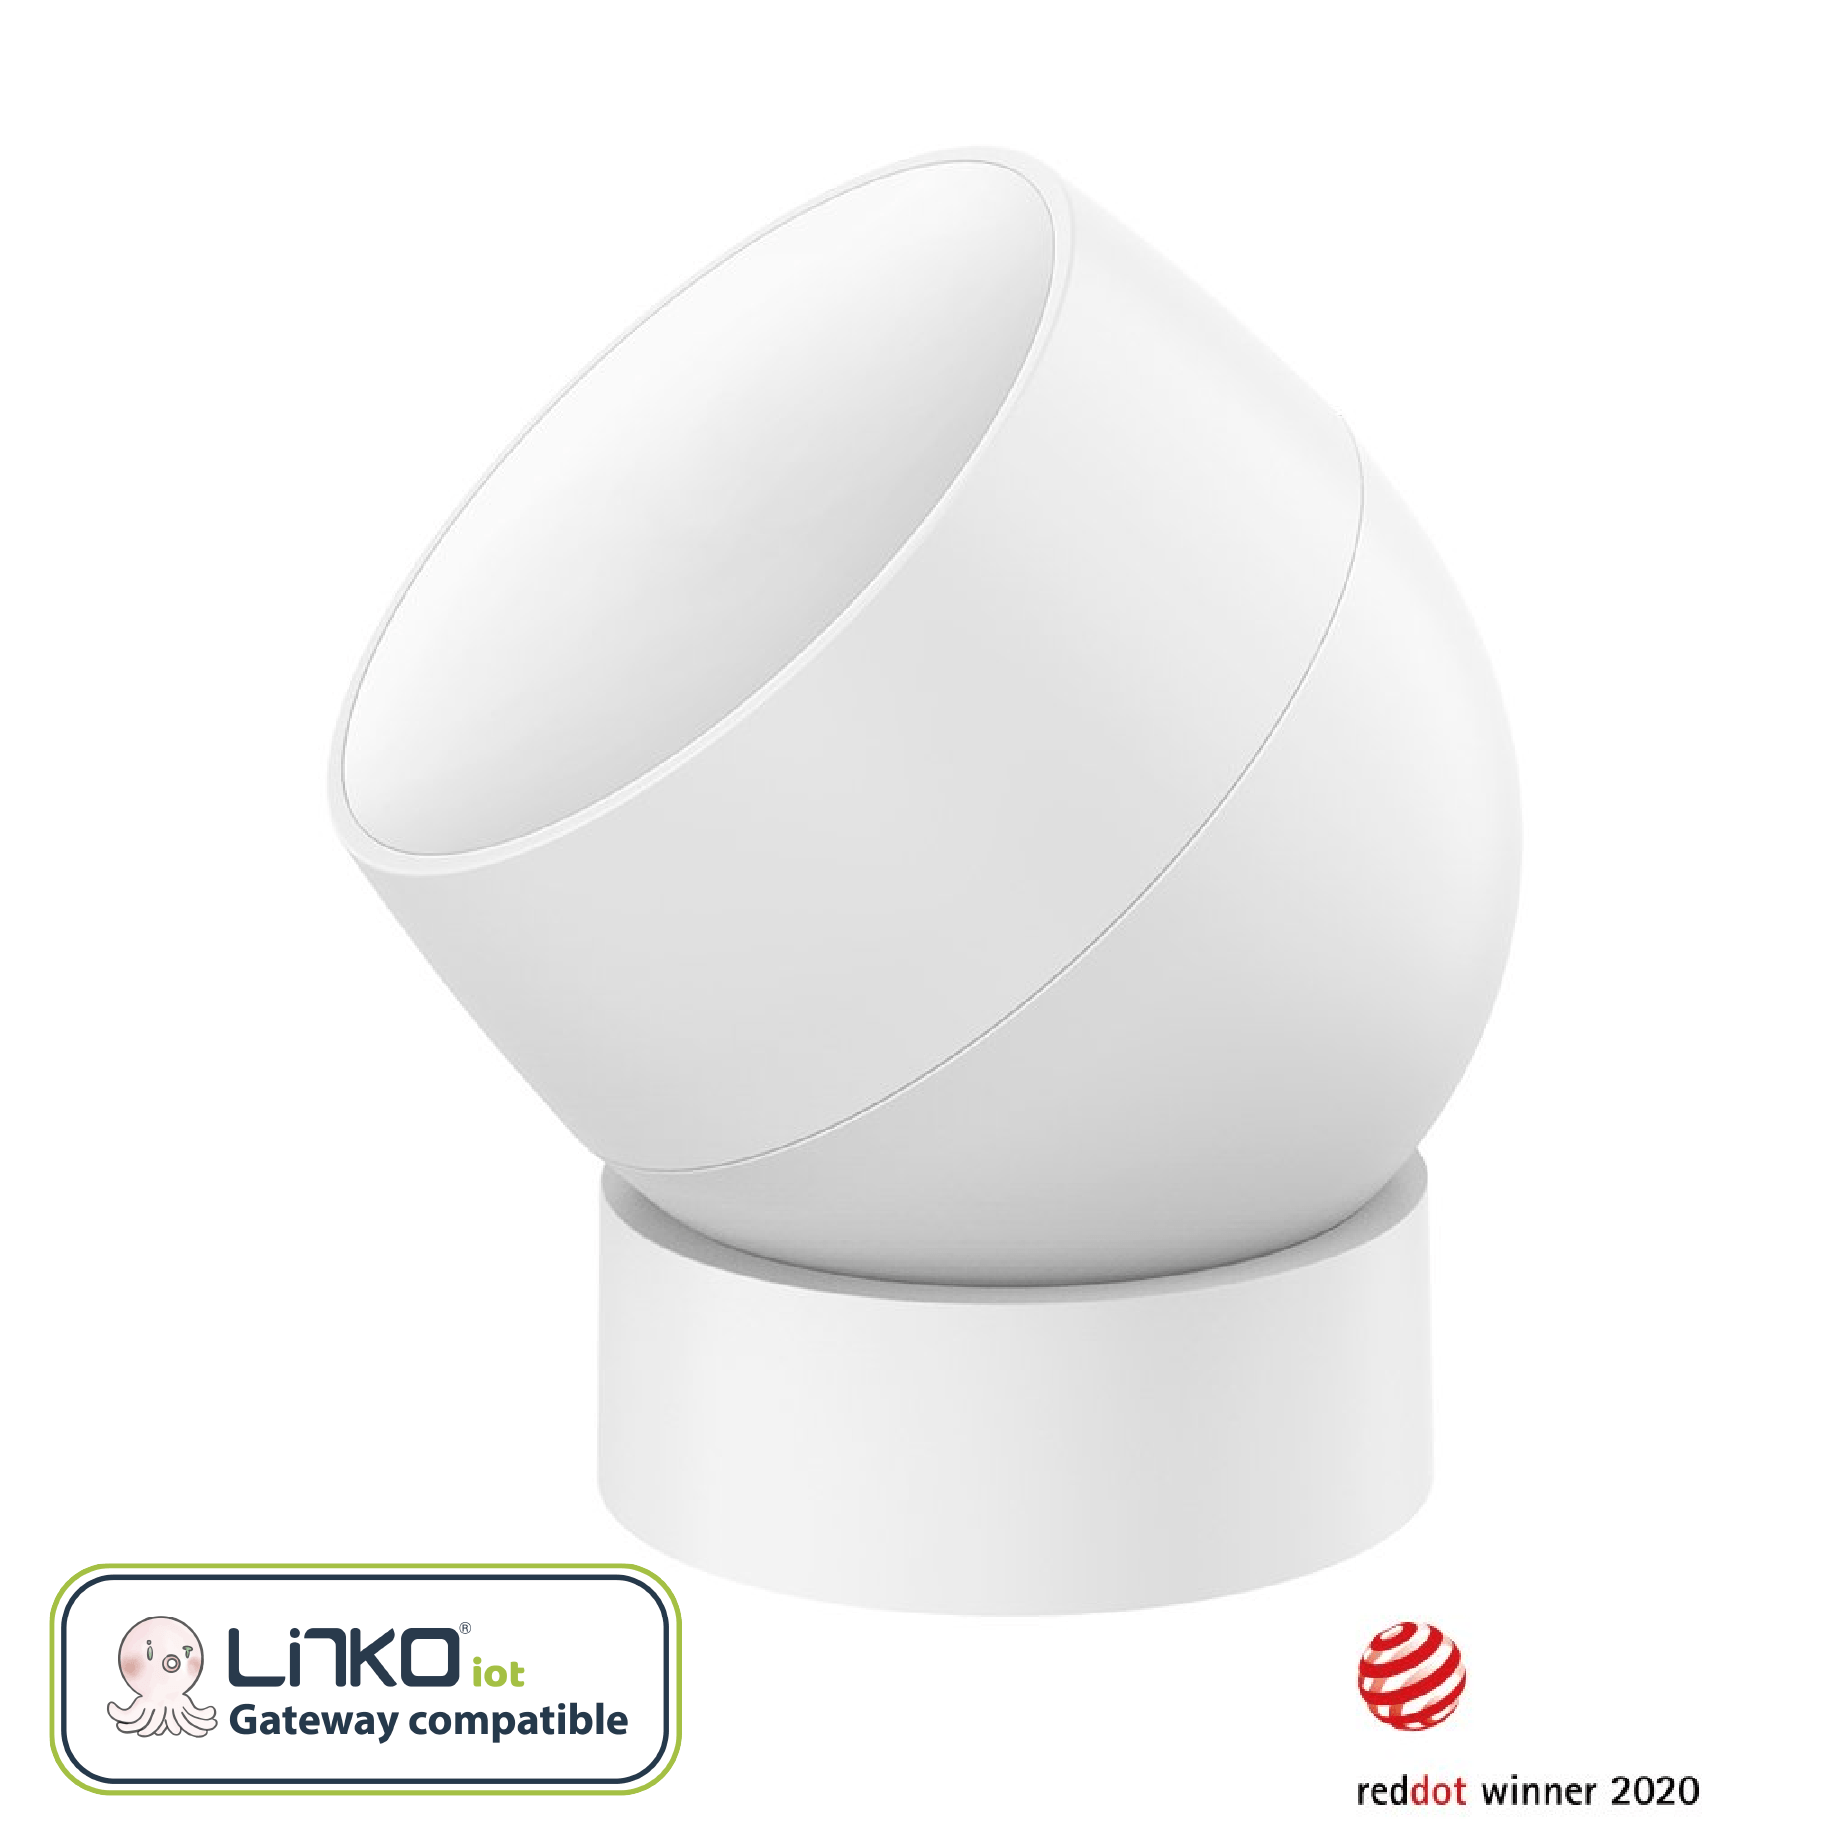 【LINKO iot】動態感應器 PIR Motion Sensor｜家居安全｜ 免拉線智能家居系統 - LINKO Shop